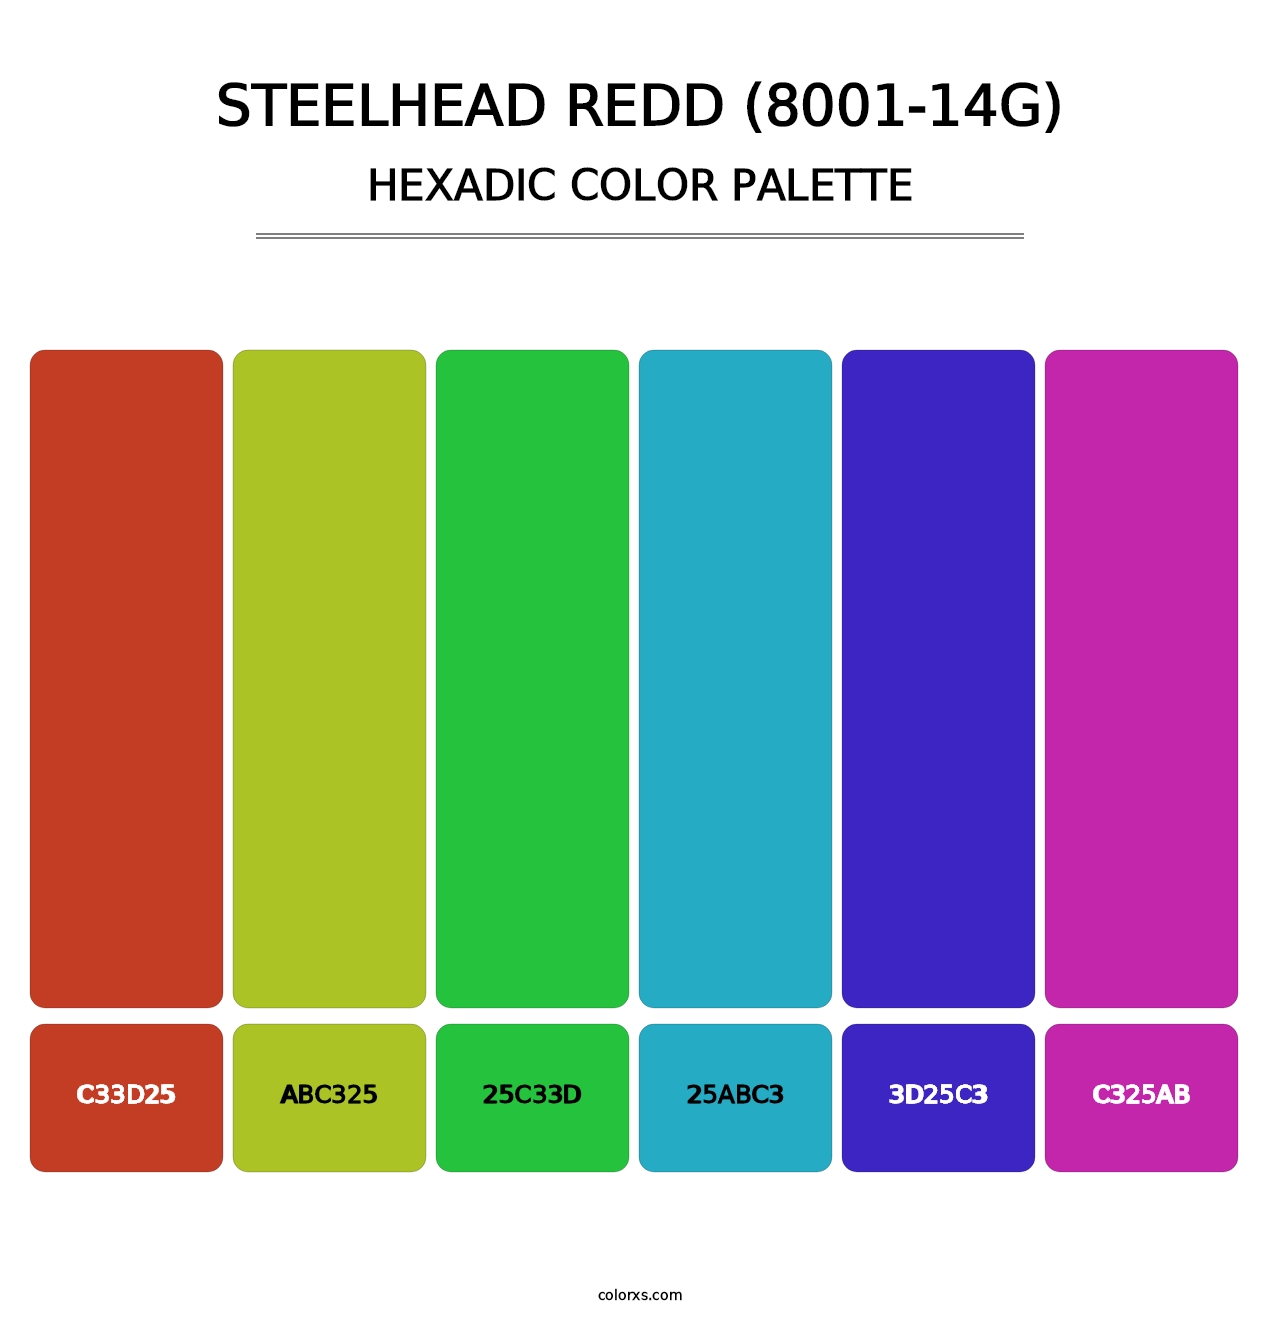 Steelhead Redd (8001-14G) - Hexadic Color Palette